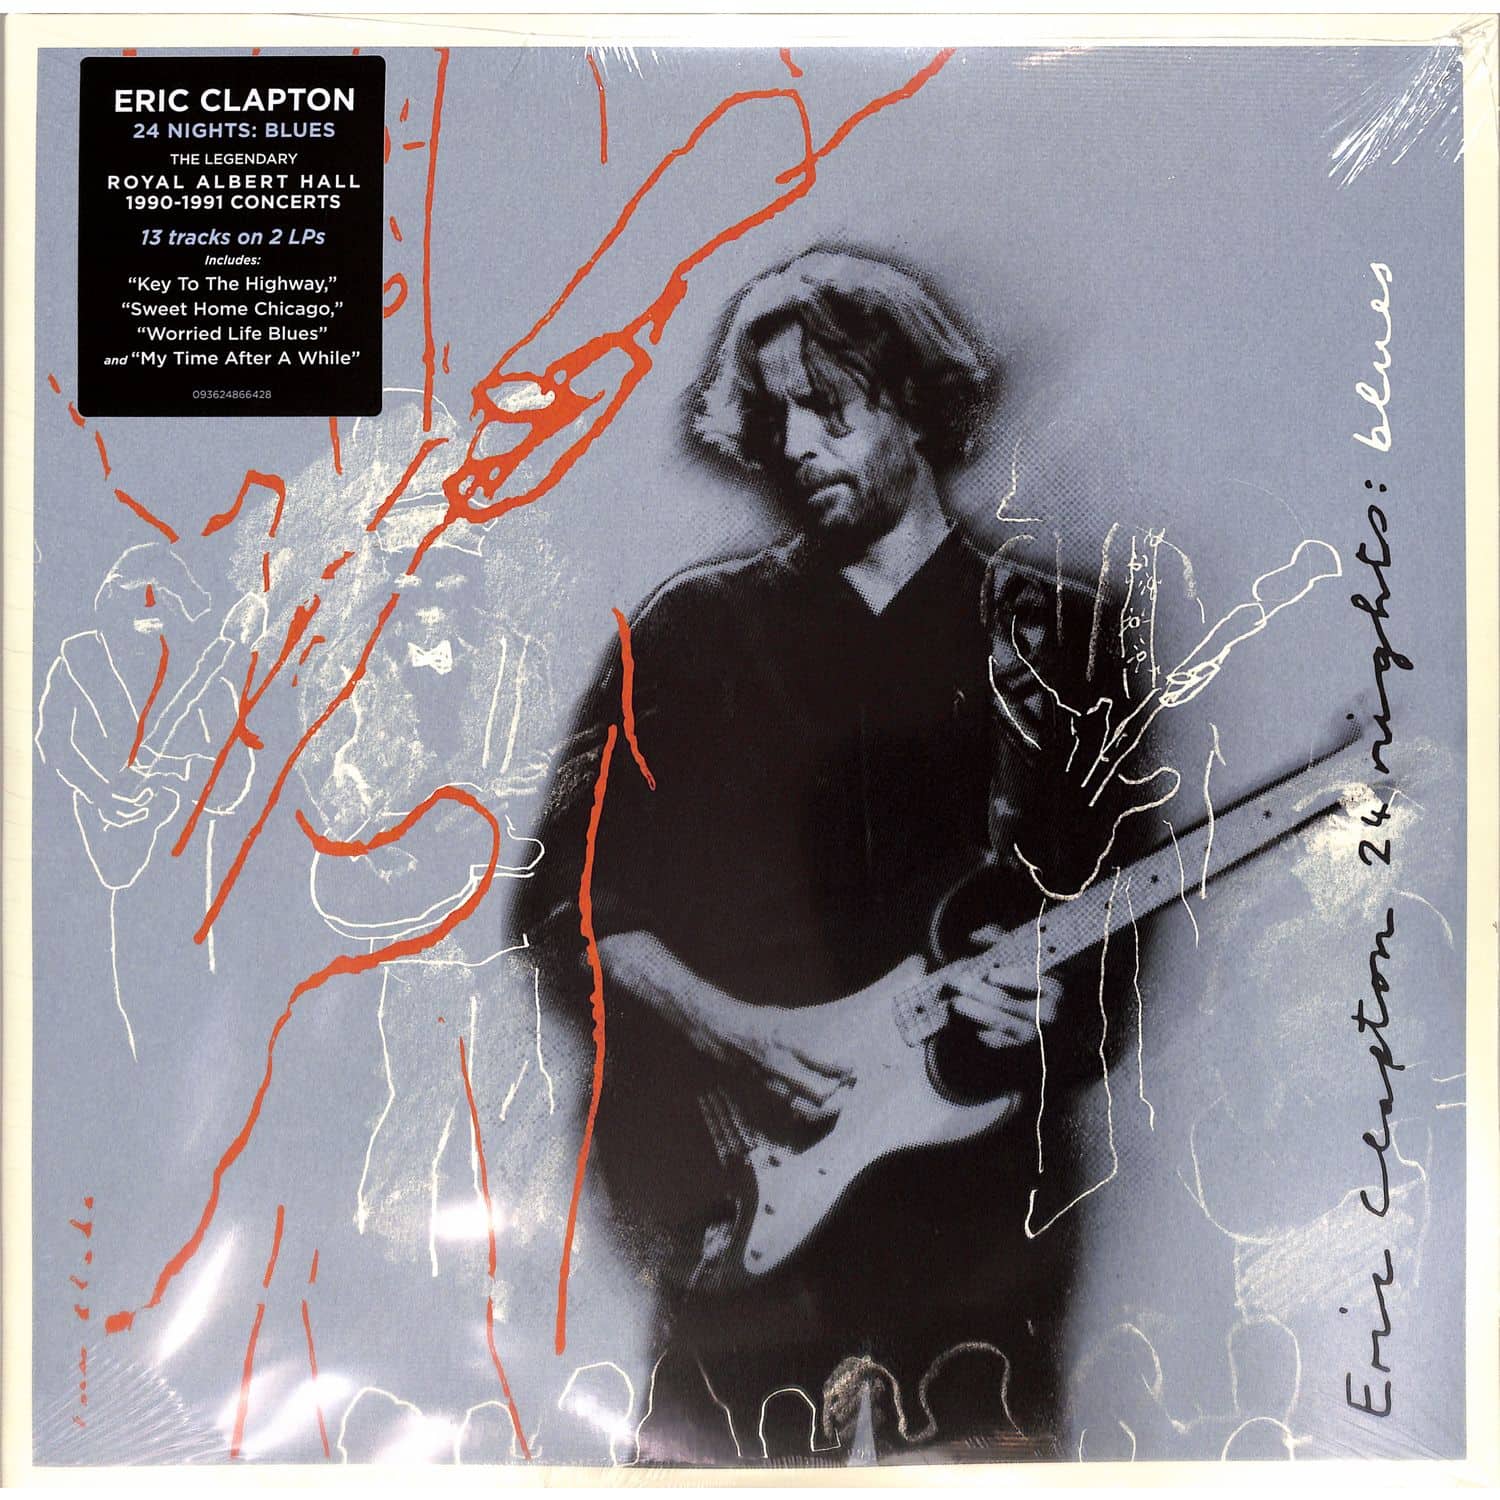 Eric Clapton - 24 NIGHTS: BLUES 